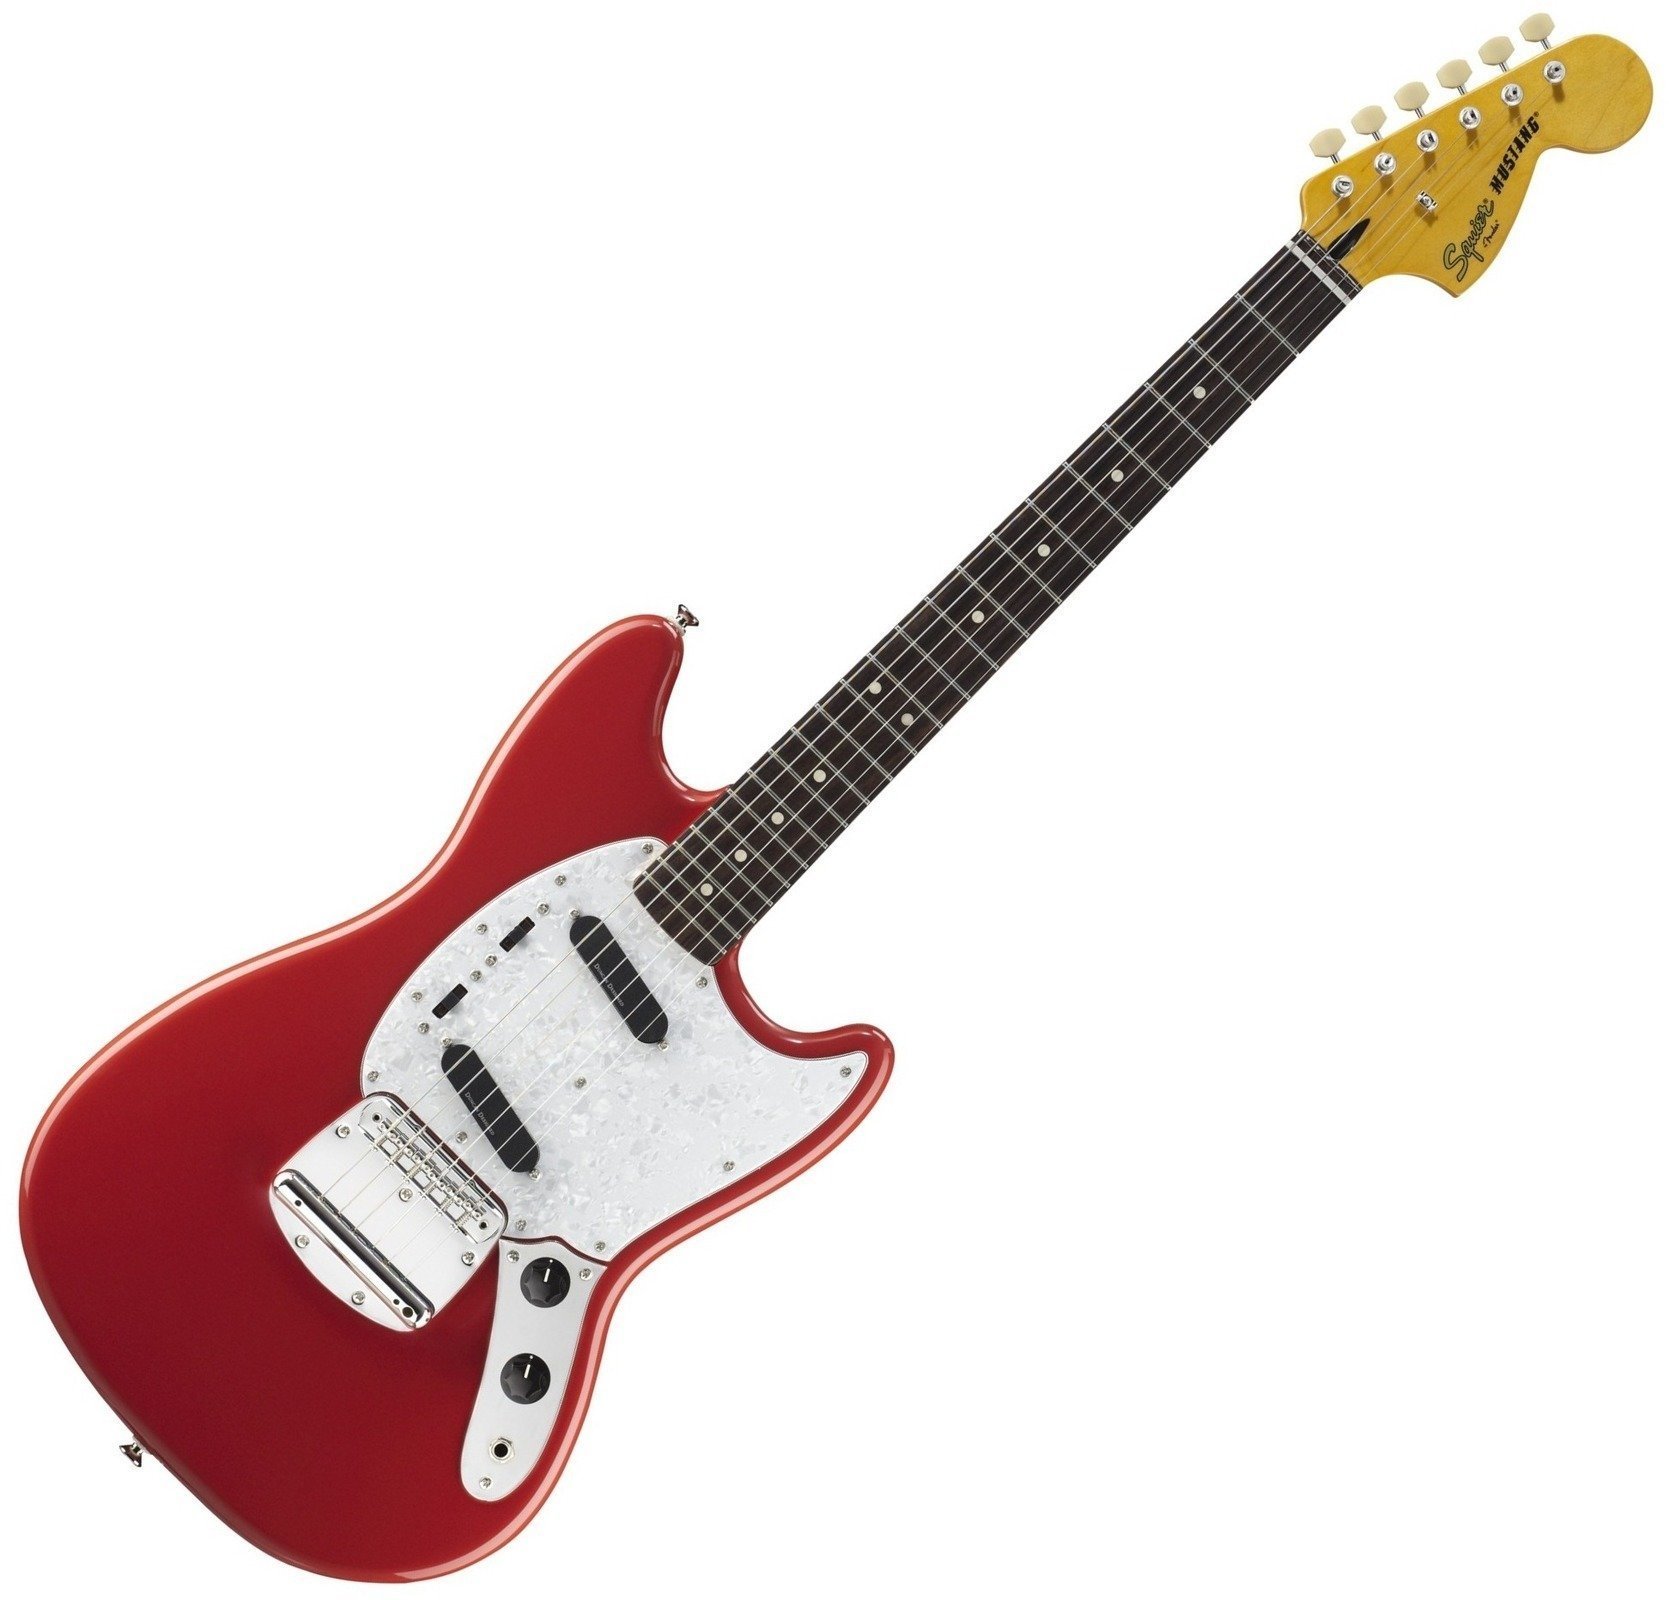 Sähkökitara Fender Squier Vintage Modified Mustang Fiesta Red